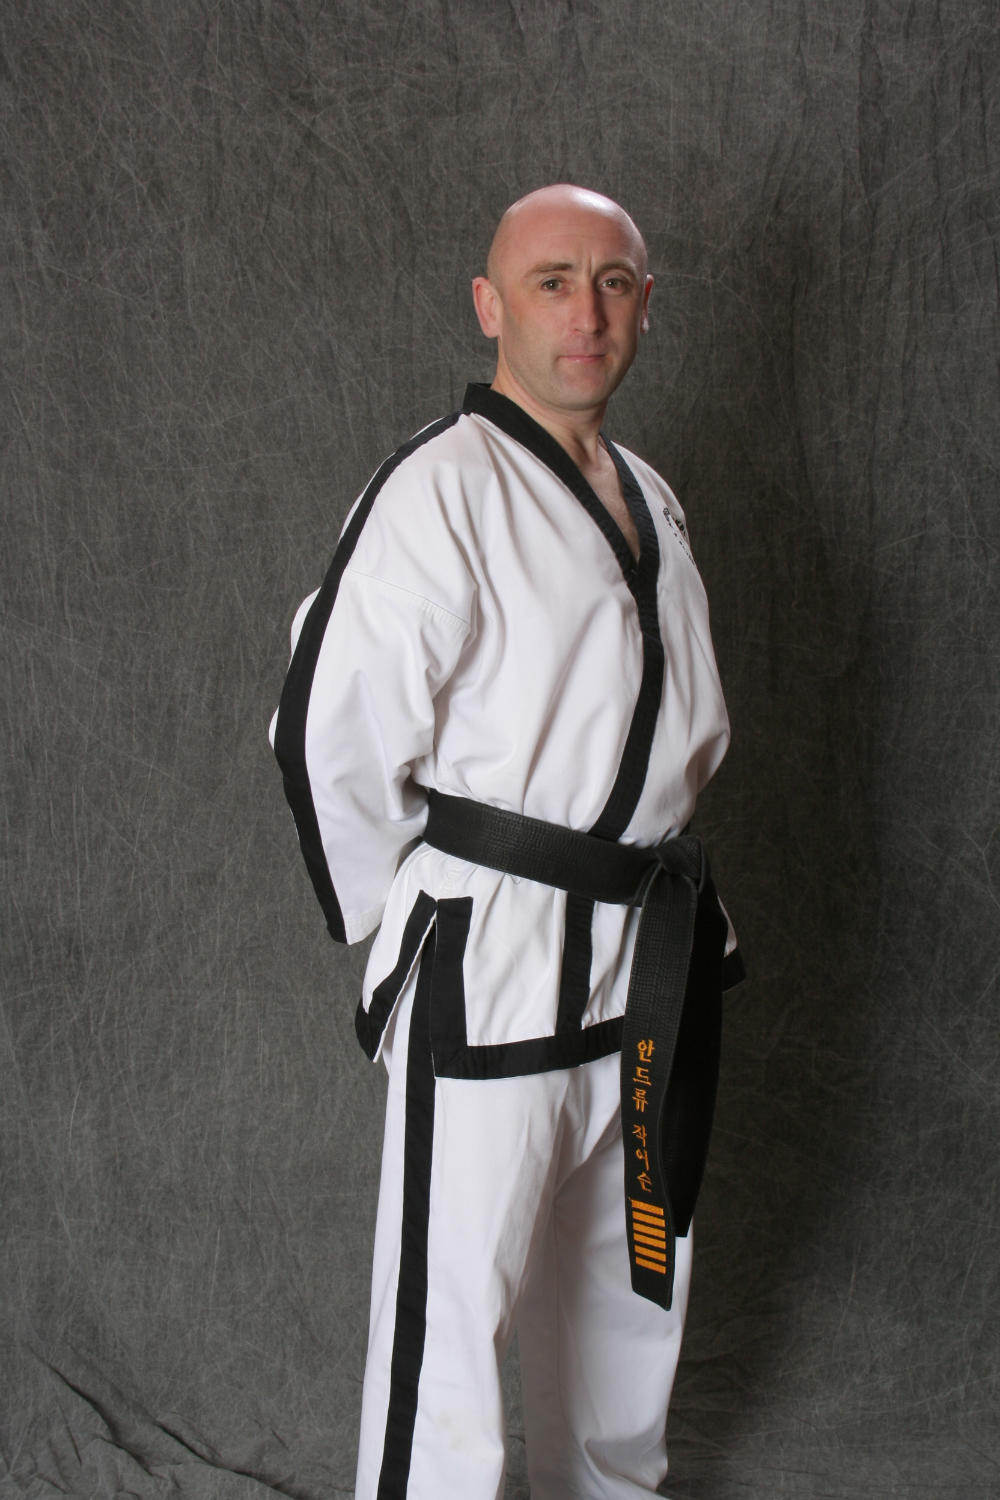 Andy Jackson 7th Degree Taekwondo Black Belt